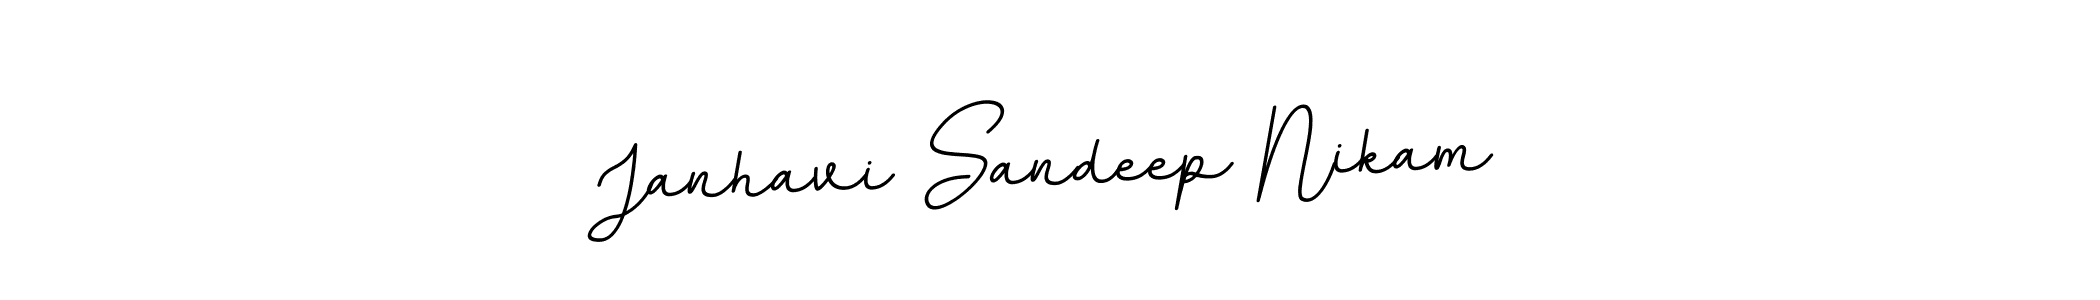 How to Draw Janhavi Sandeep Nikam signature style? BallpointsItalic-DORy9 is a latest design signature styles for name Janhavi Sandeep Nikam. Janhavi Sandeep Nikam signature style 11 images and pictures png